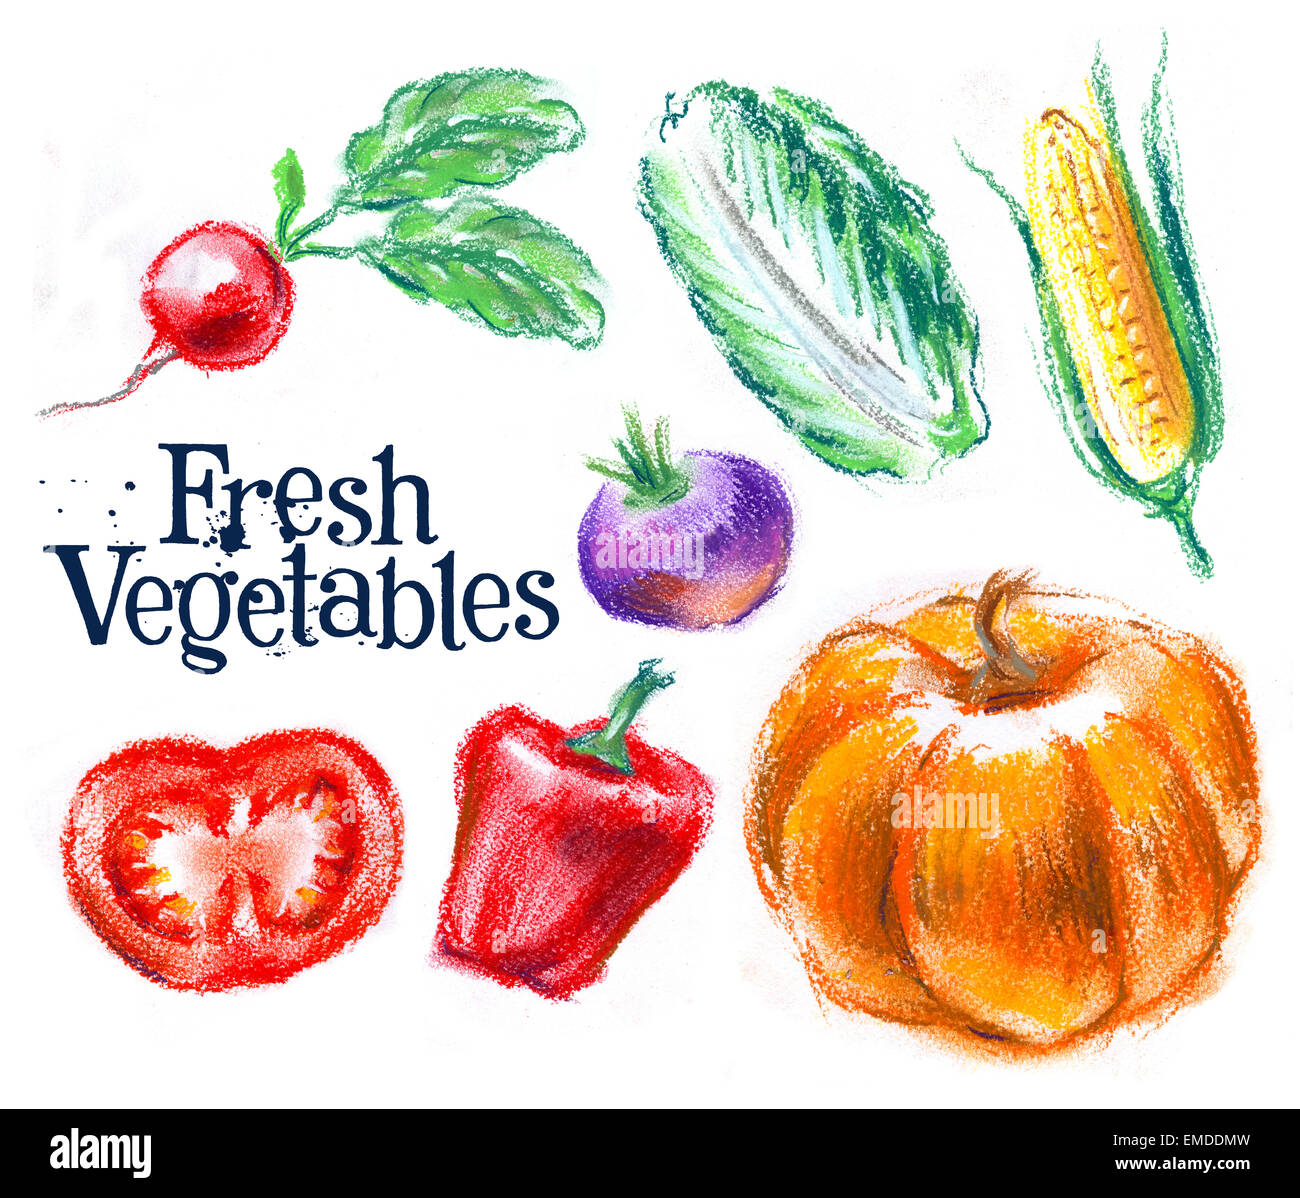 fresh vegetables on white background Stock Photo